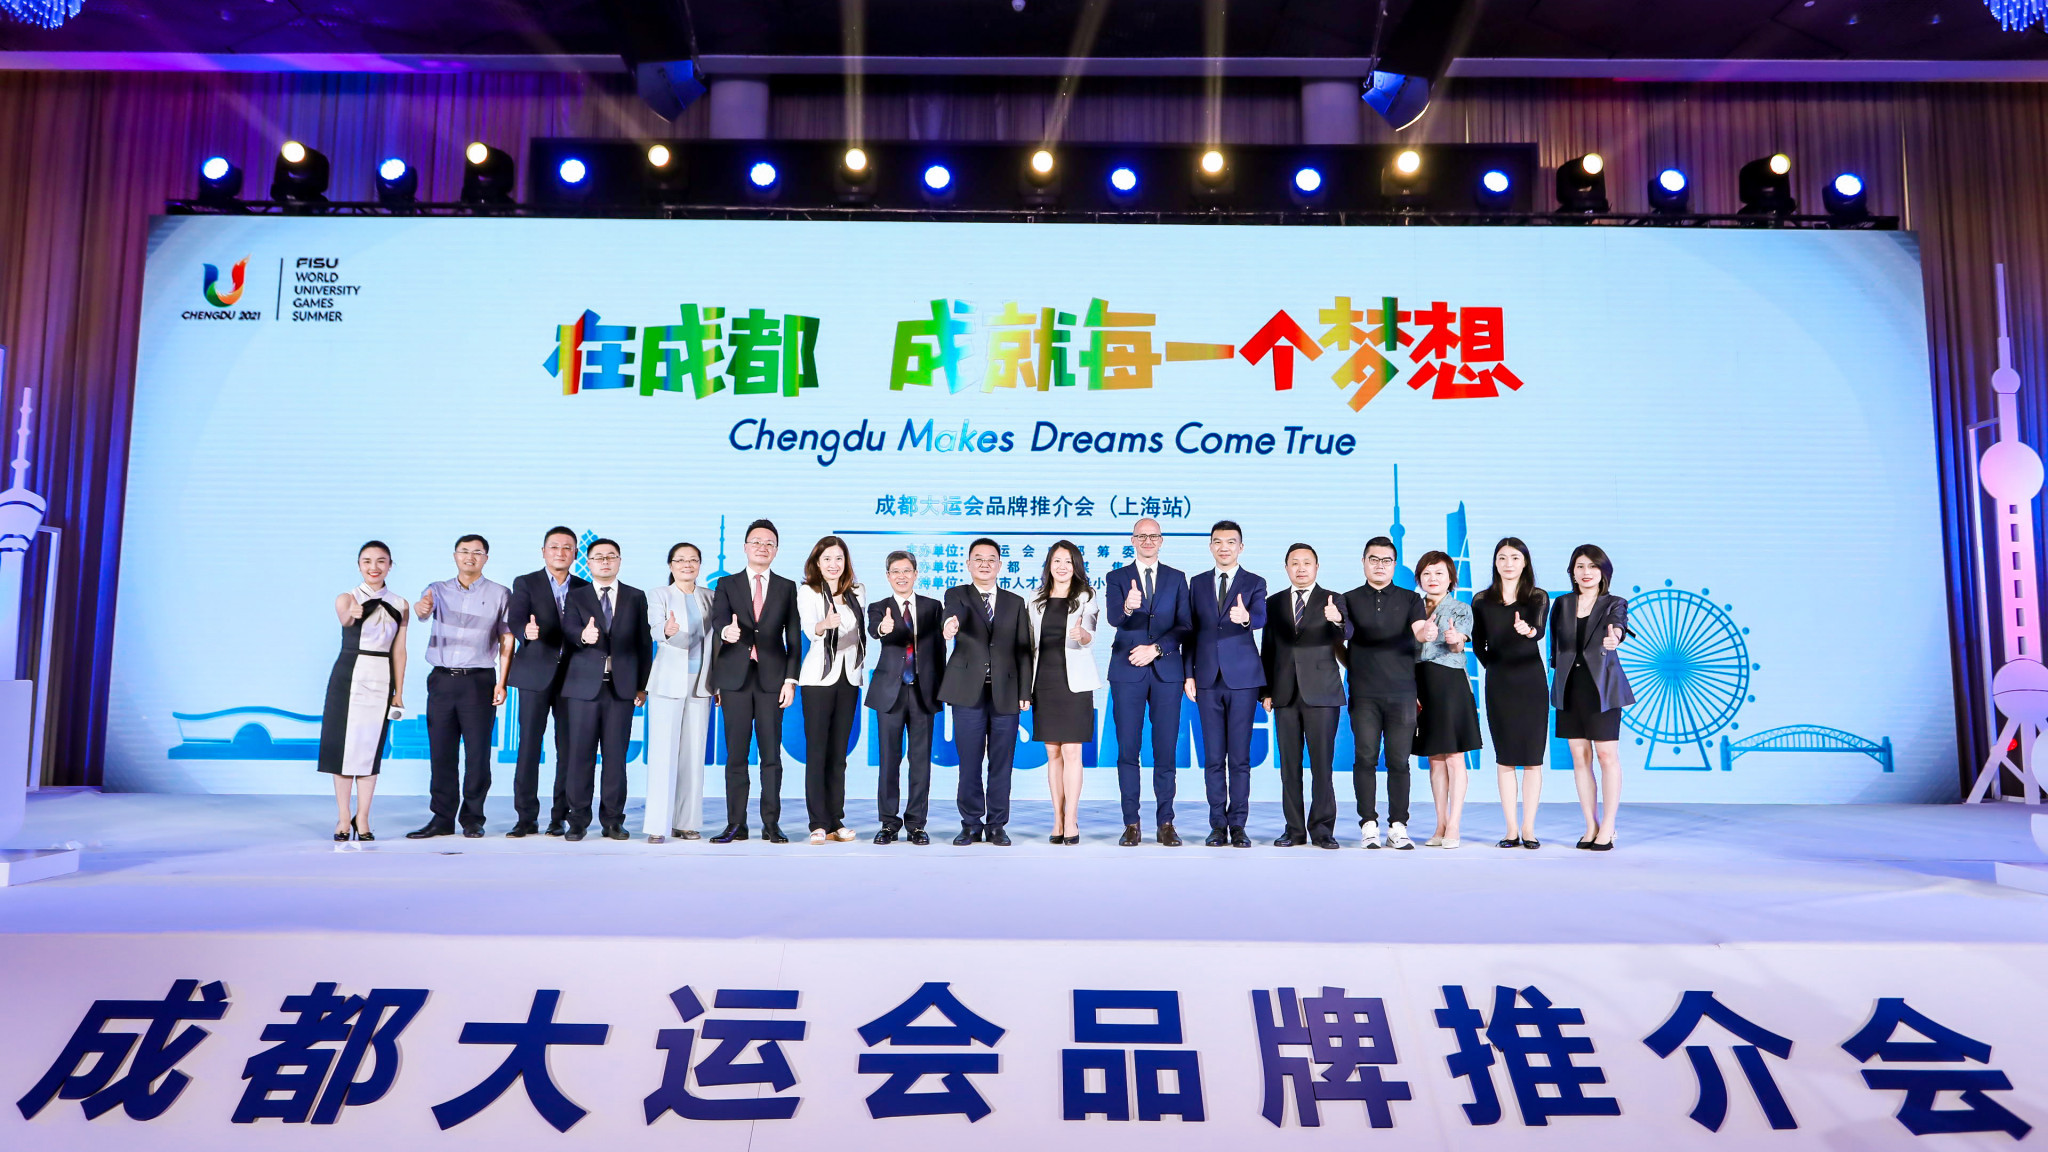 Chengdu 2021 announces sponsorship agreements at Shanghai press conference